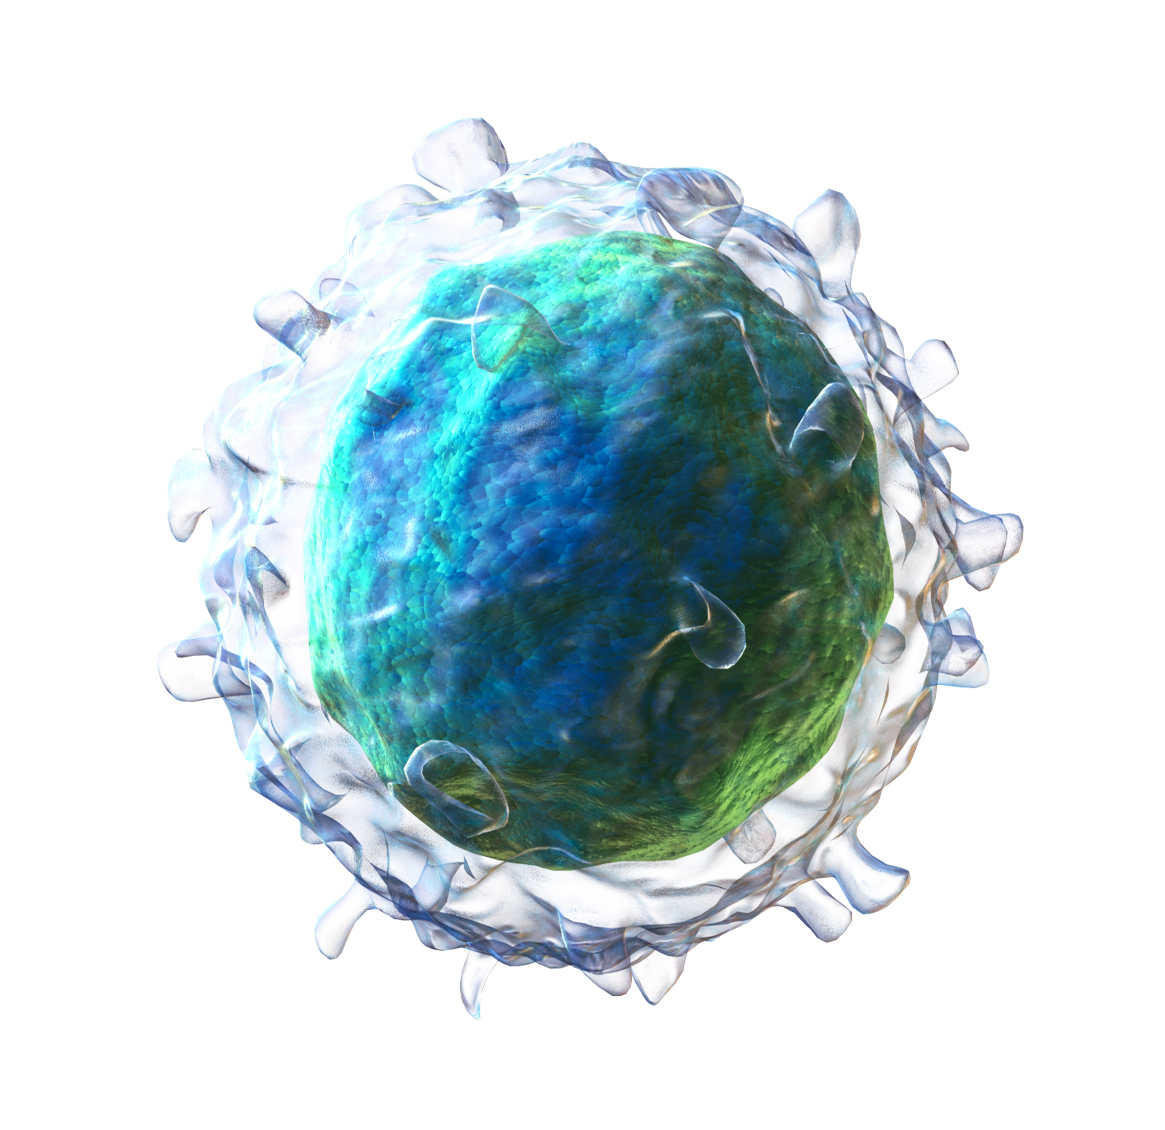 Image of a lymphocyte